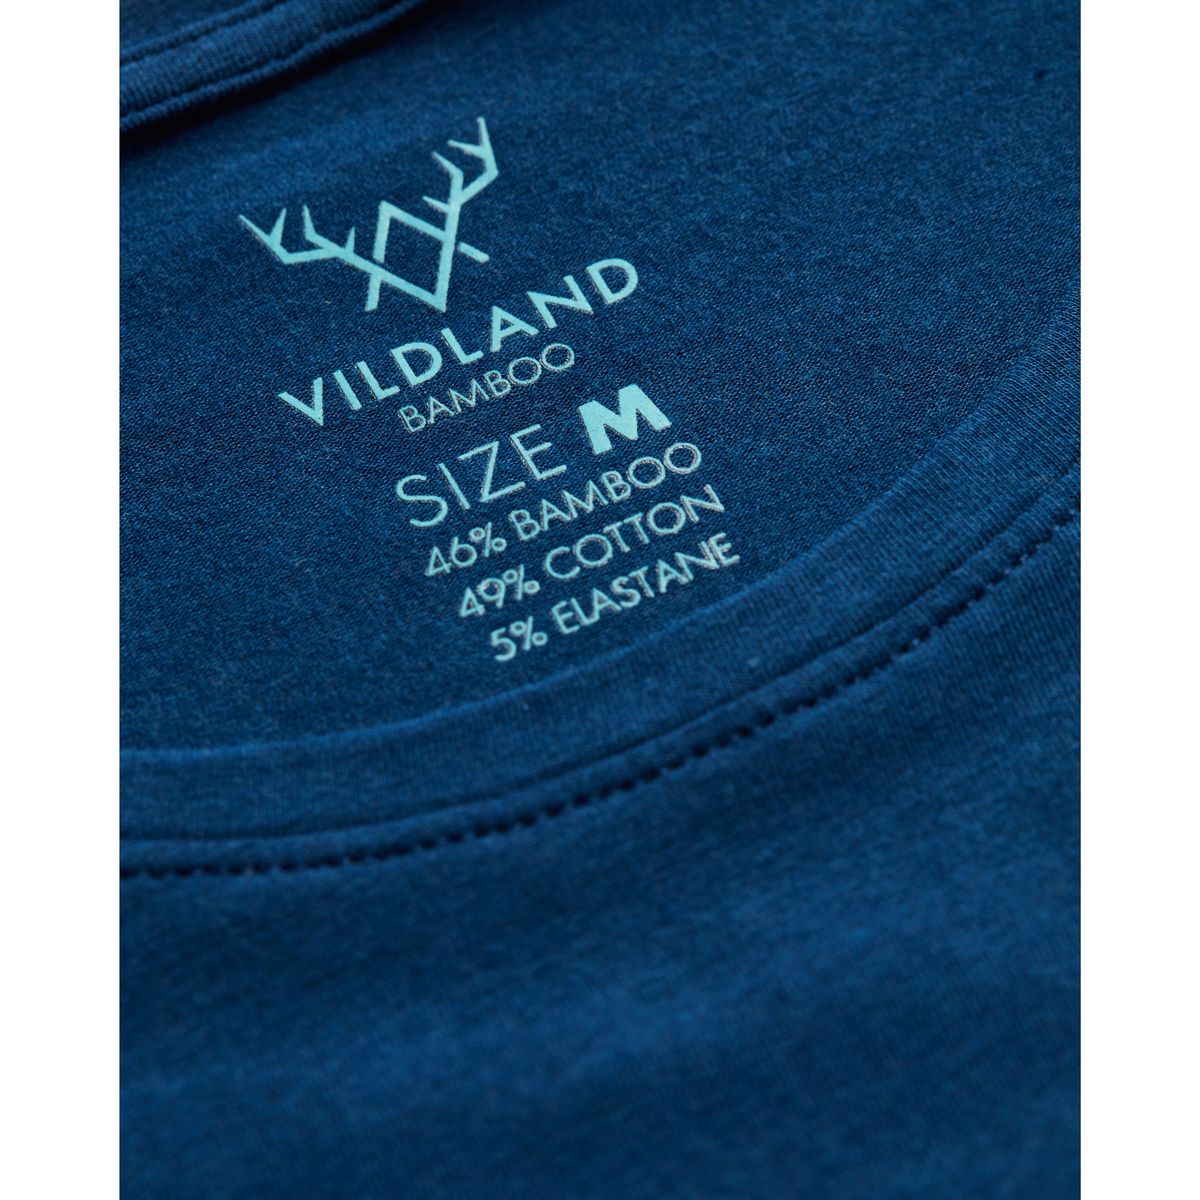 Vildland Bamboo t-shirt